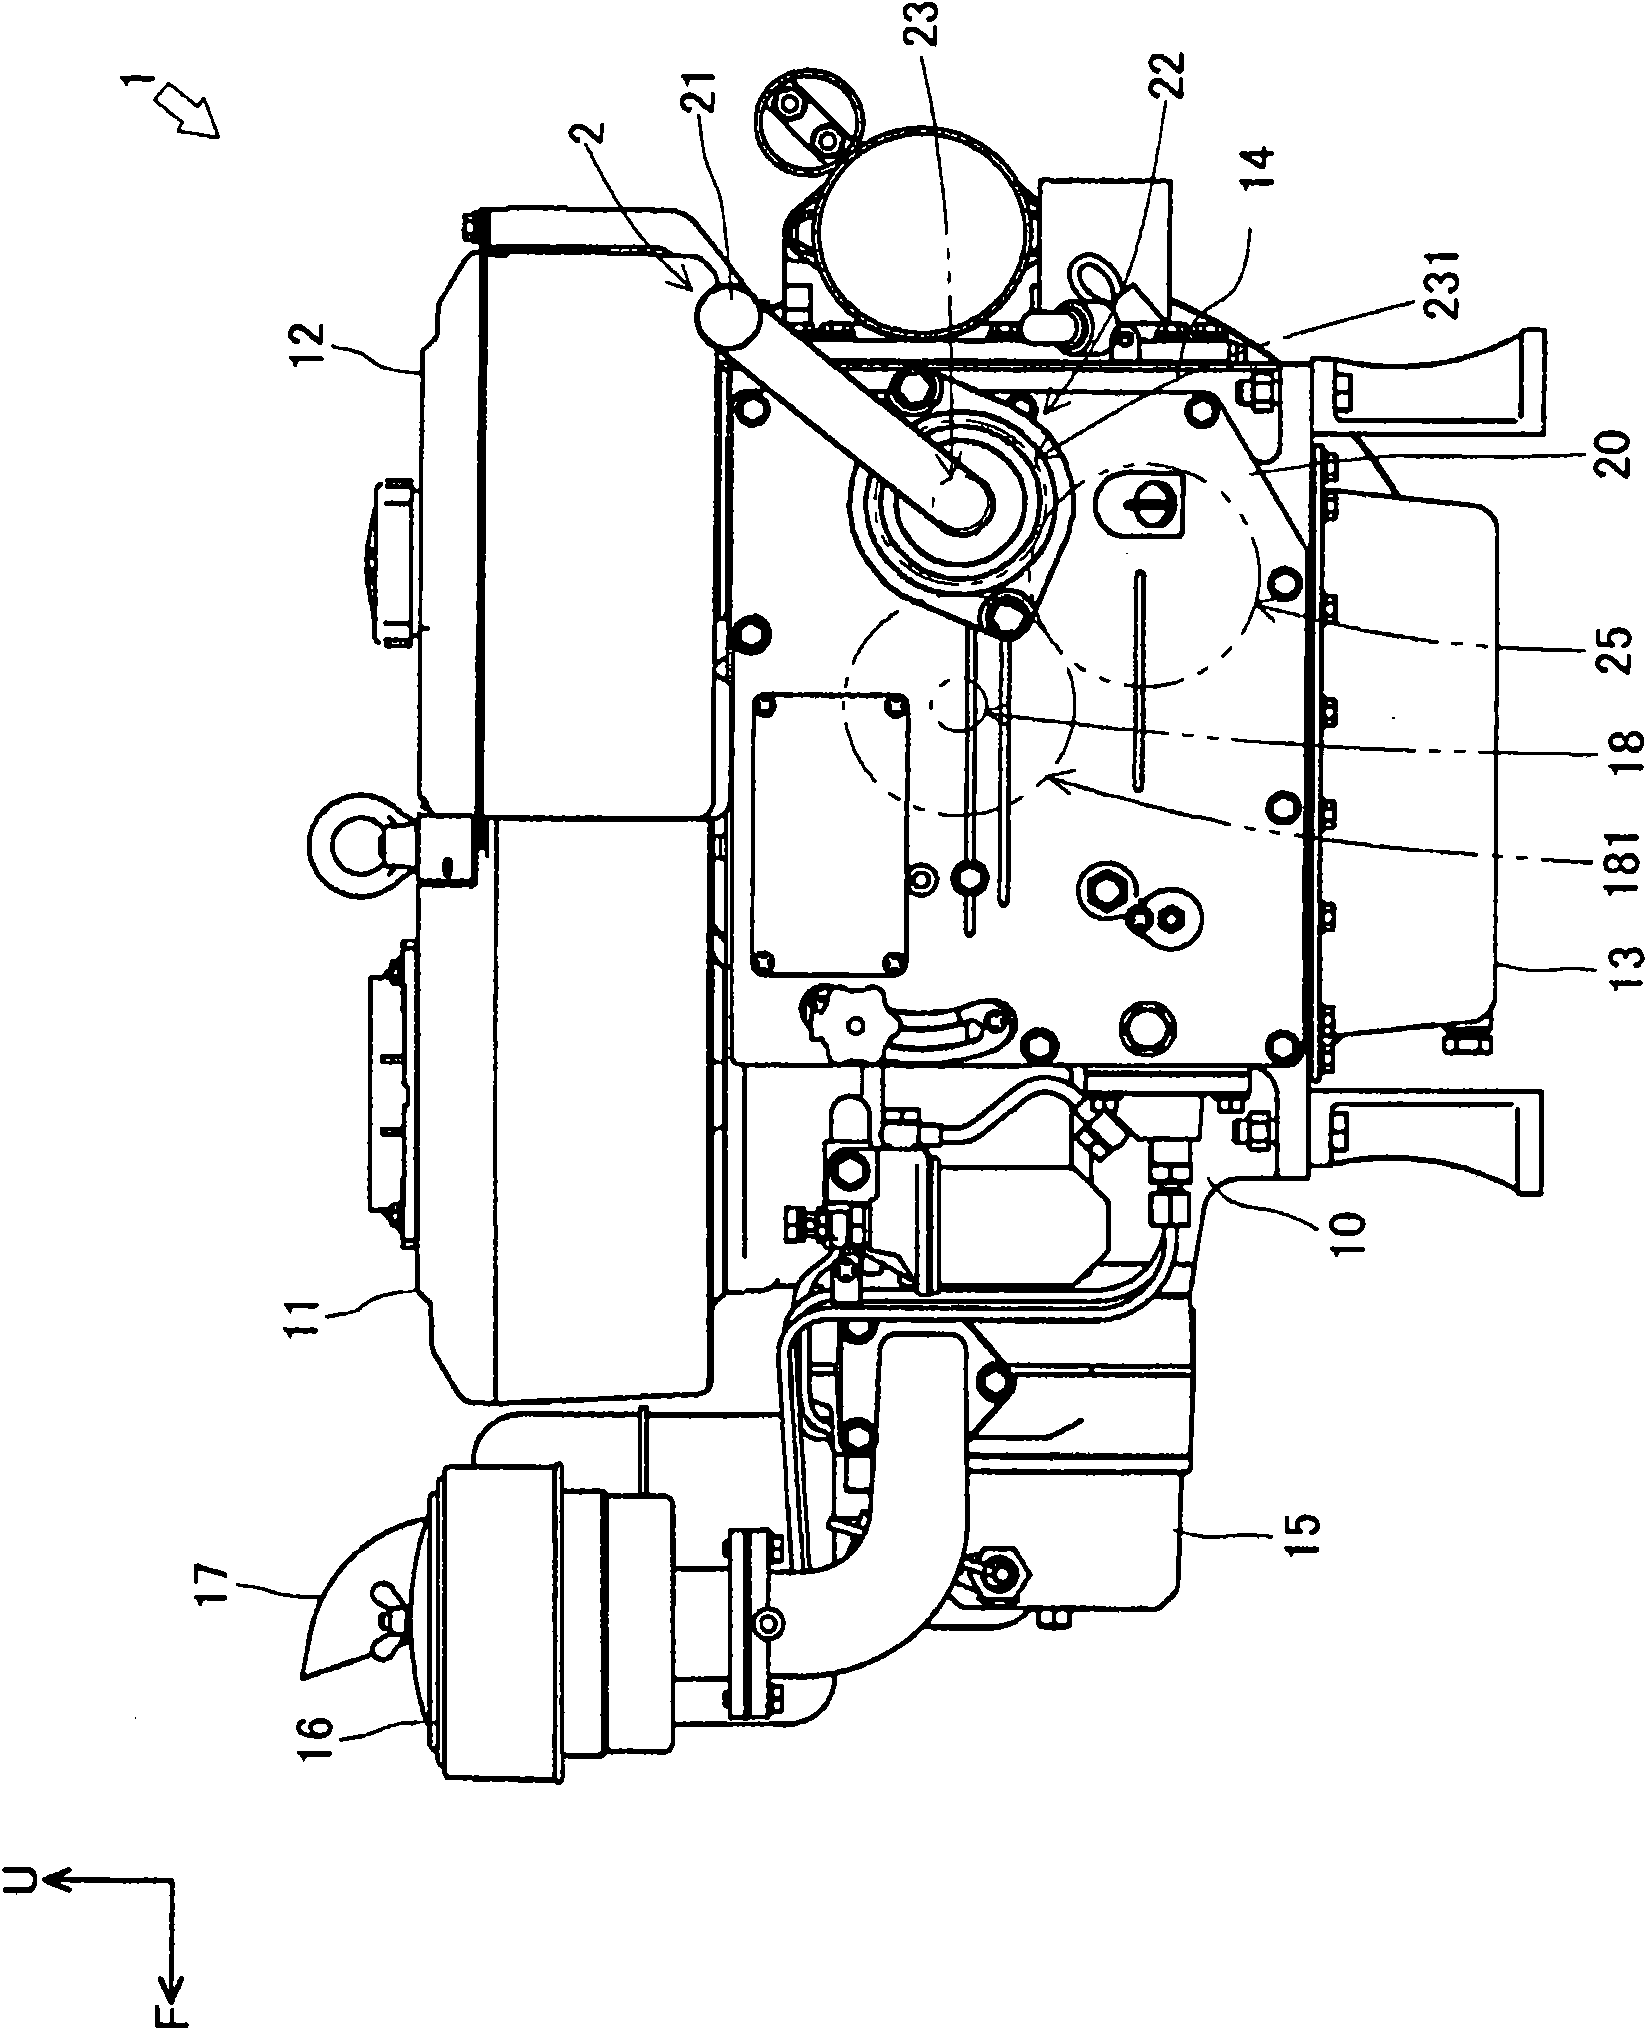 Engine starting device